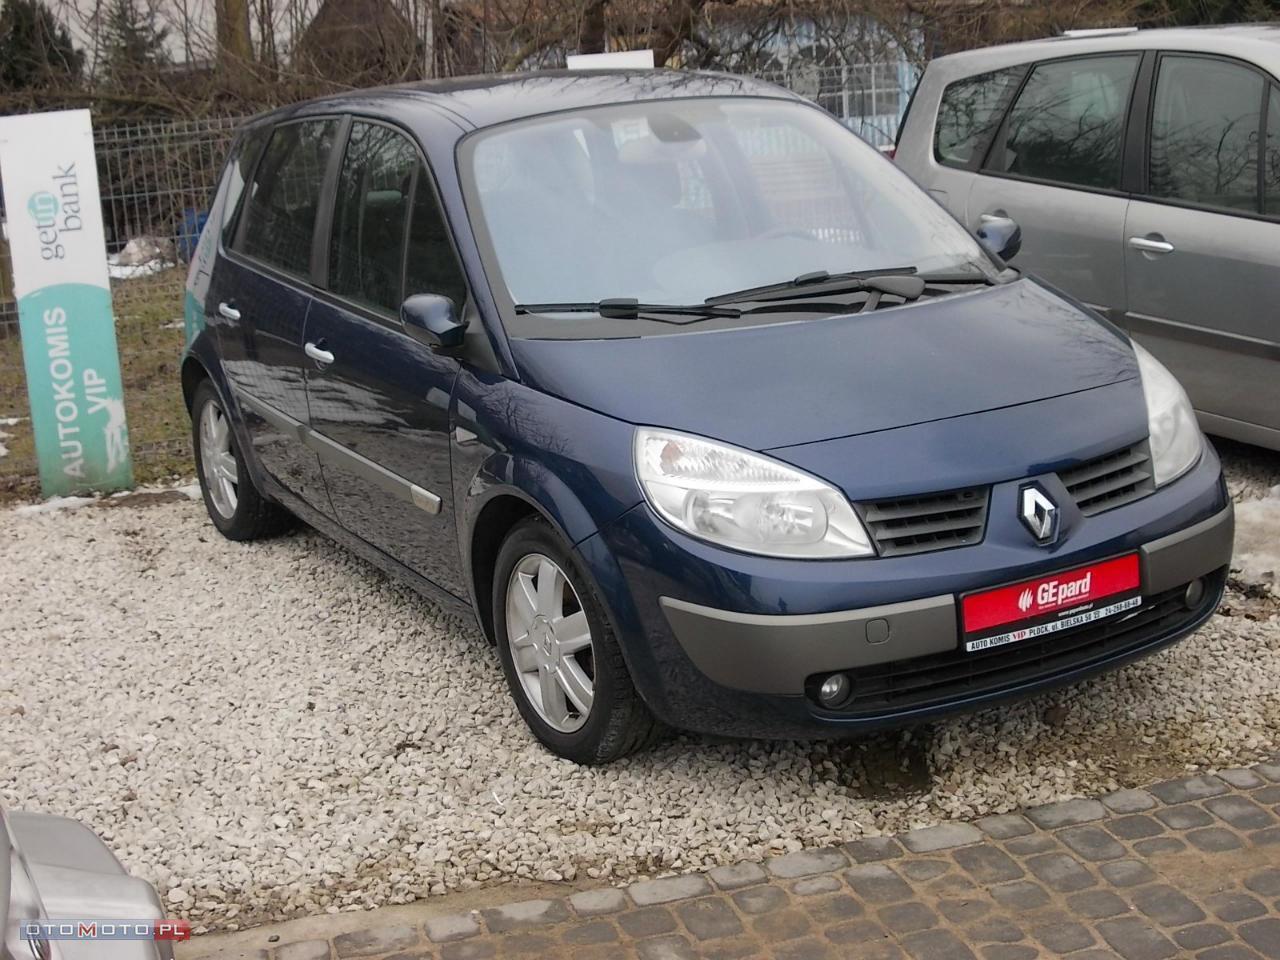 Renault Scenic właściciel:*** 698-10-90-90***